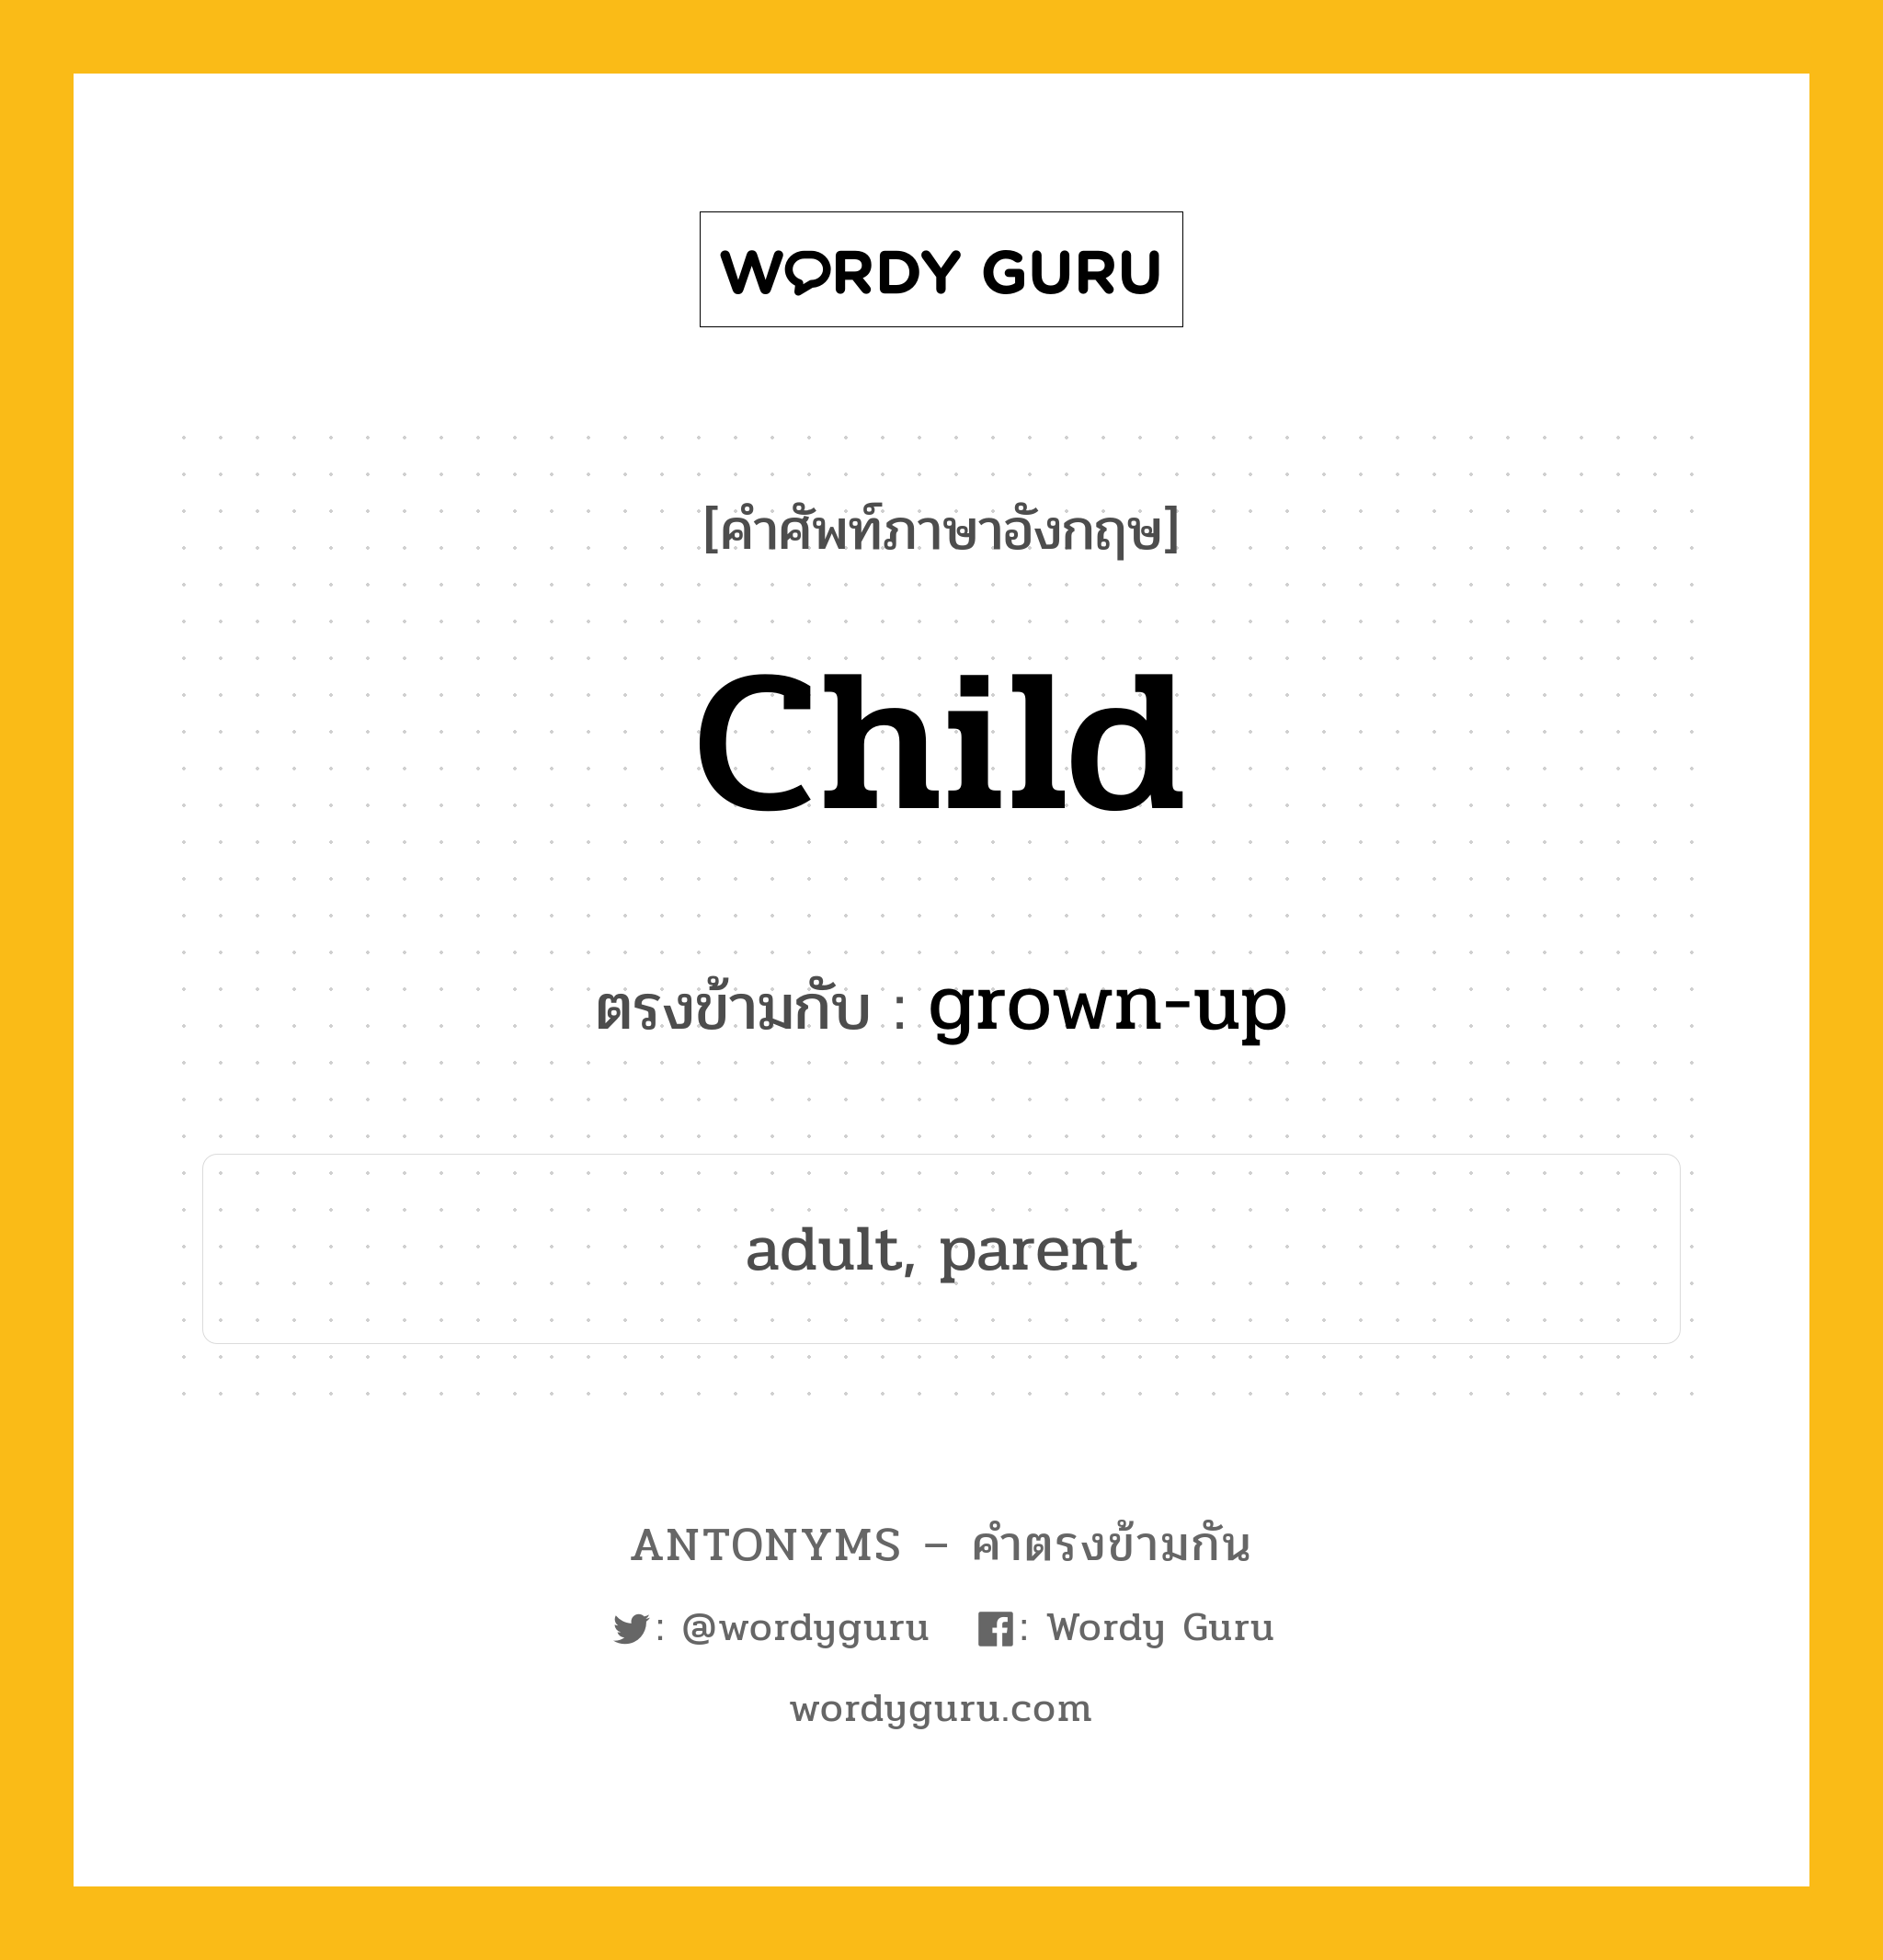 child เป็นคำตรงข้ามกับคำไหนบ้าง?, คำศัพท์ภาษาอังกฤษ child ตรงข้ามกับ grown-up หมวด grown-up